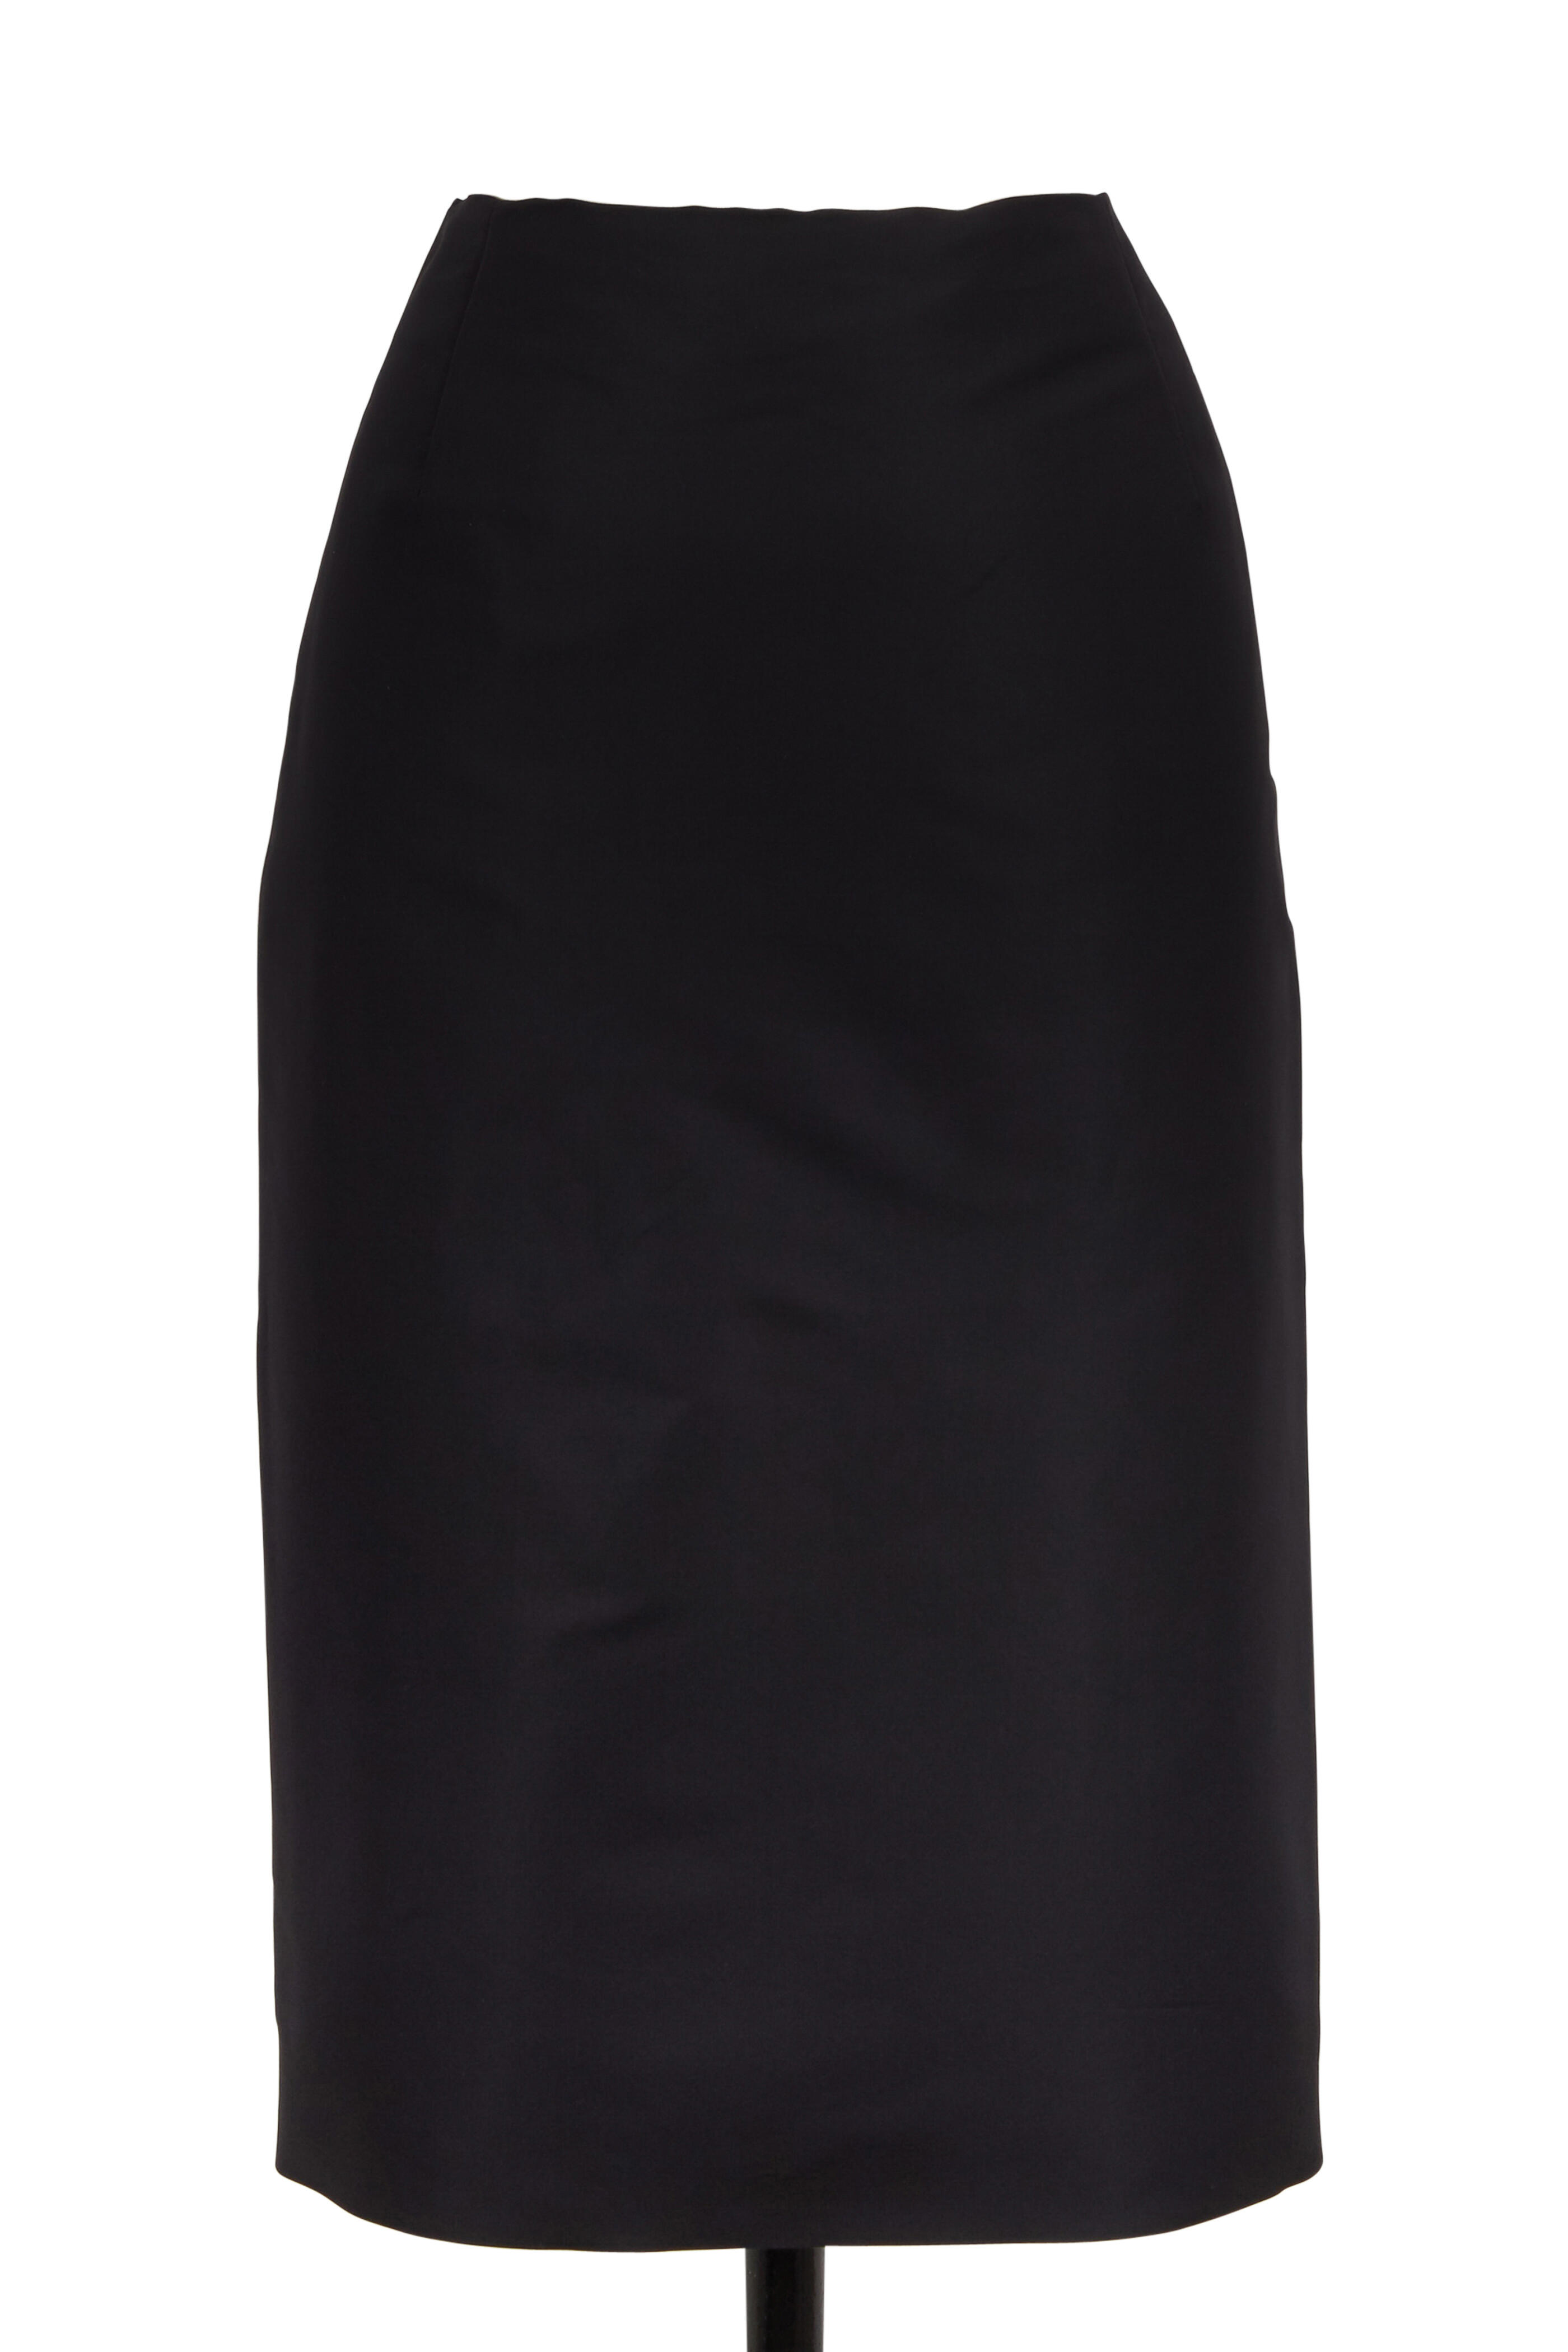 Carolina Herrera - Black Silk Faille Pencil Skirt